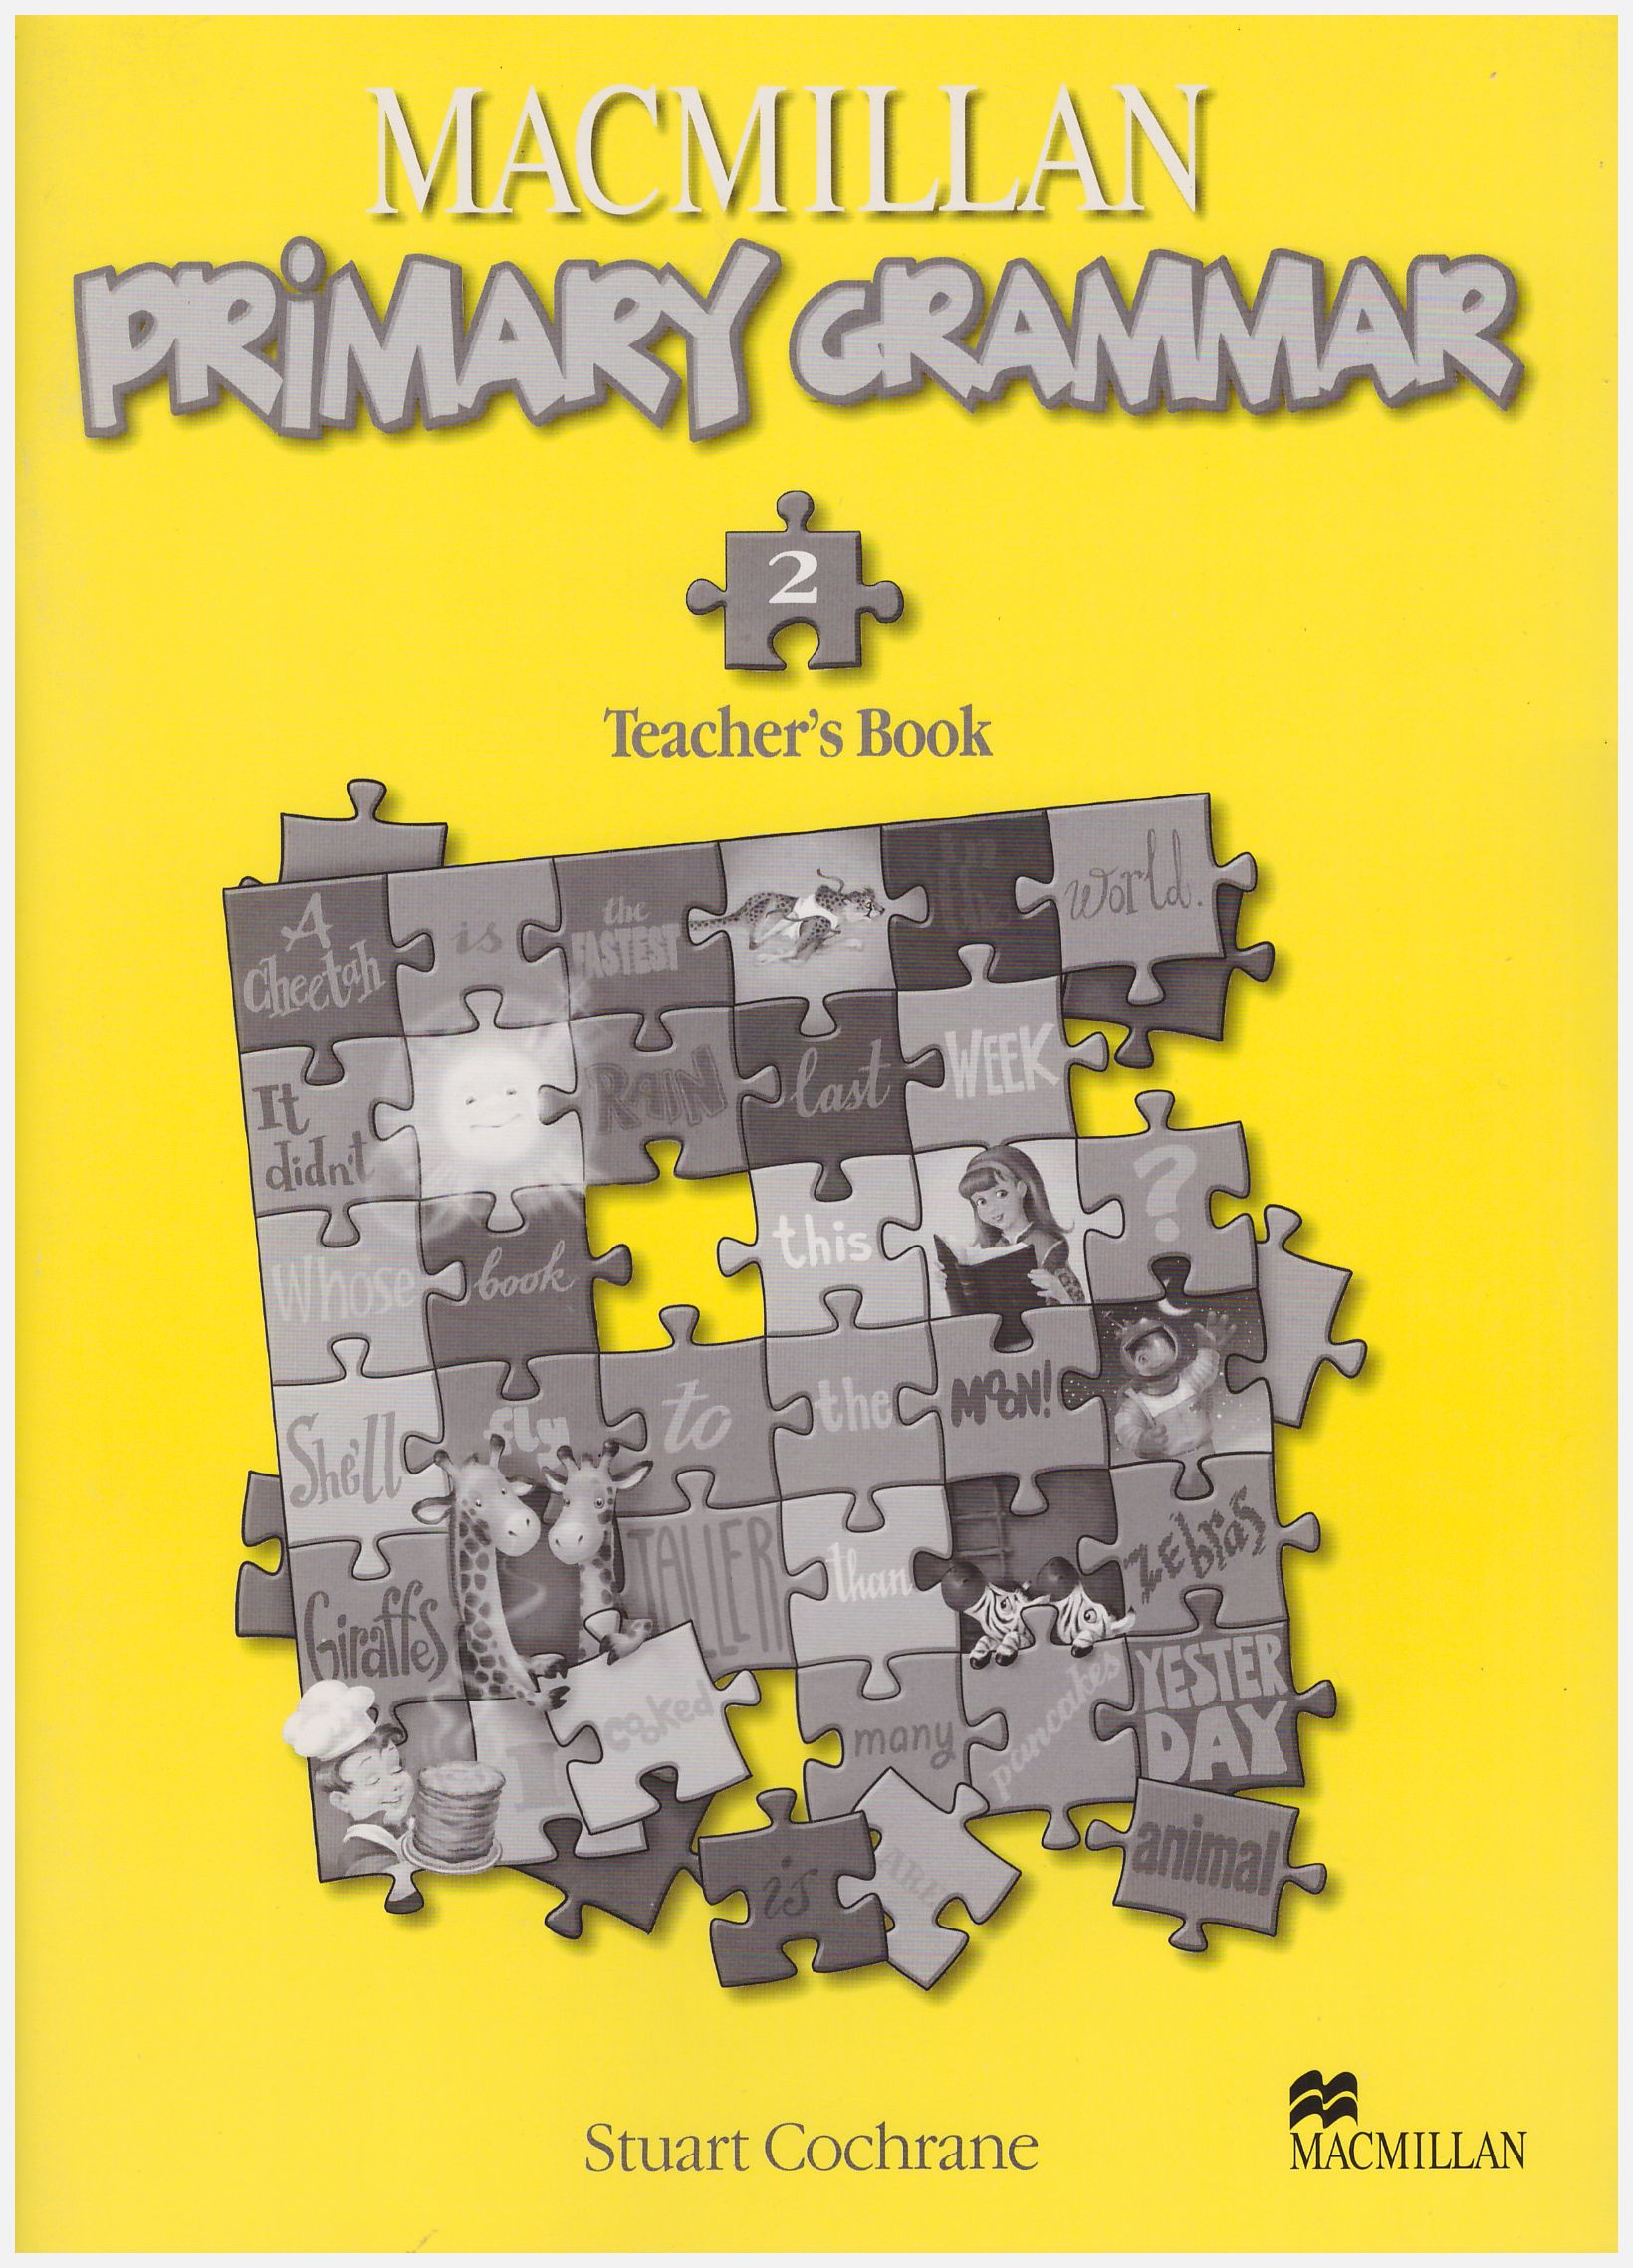 Macmillan s book. Английский Macmillan Primary Grammar. Макмиллан Primary Grammar. Макмиллан Primary Grammar 2. Макмиллан грамматика а1.